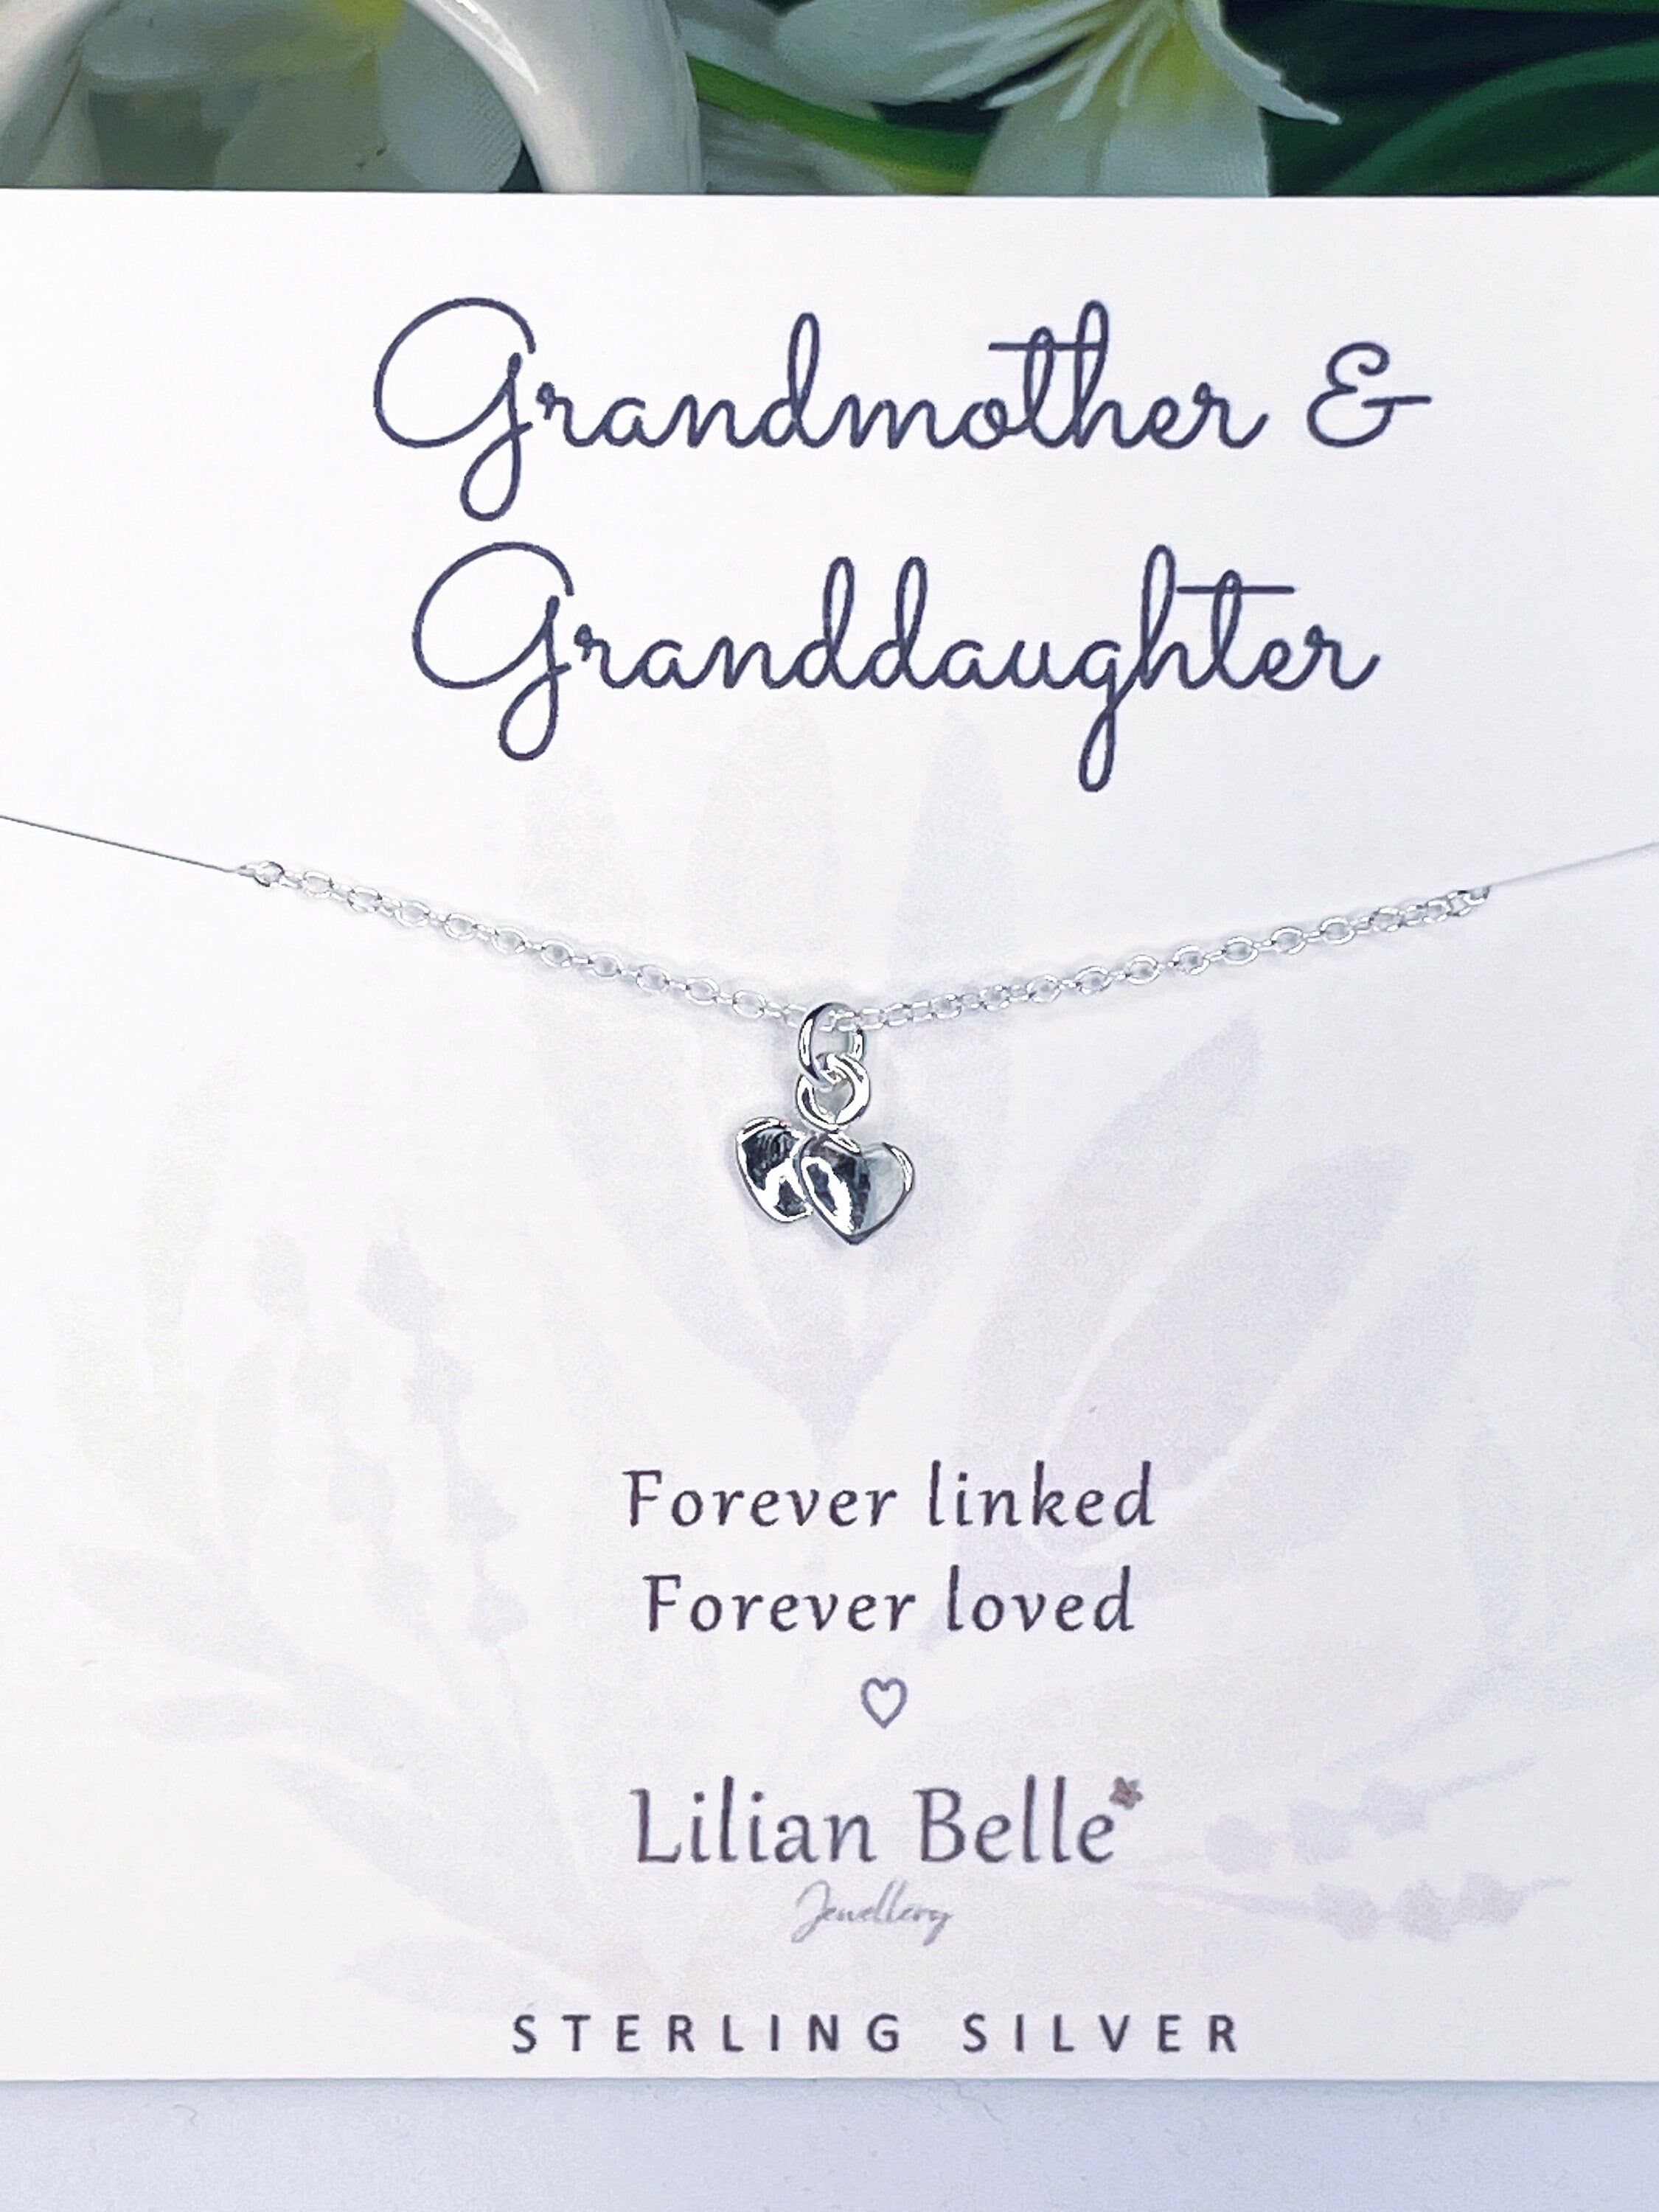 Grandma's Brag Board - Birthday Gifts for Grandmother from Granddaughter |  eBay